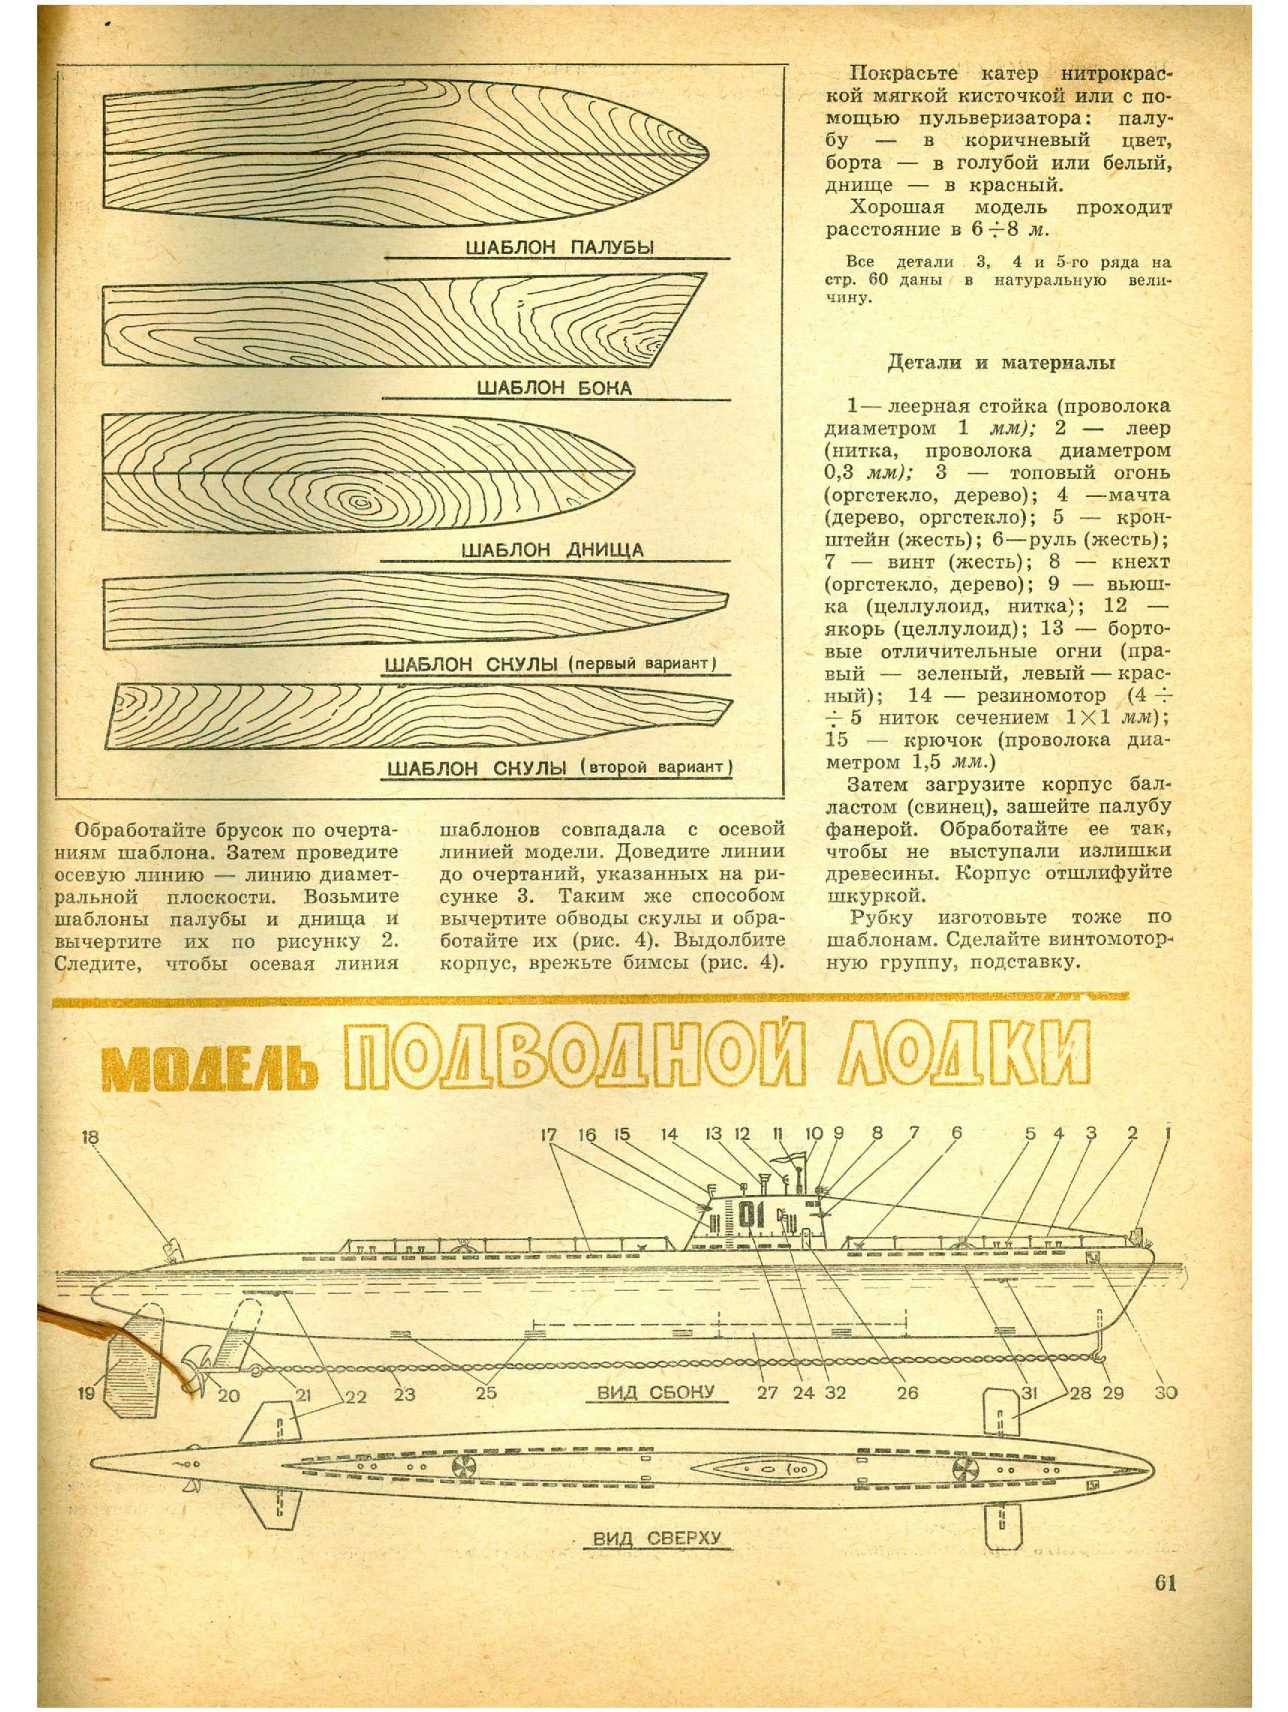 ЮМК 13, 1965, 61 c.